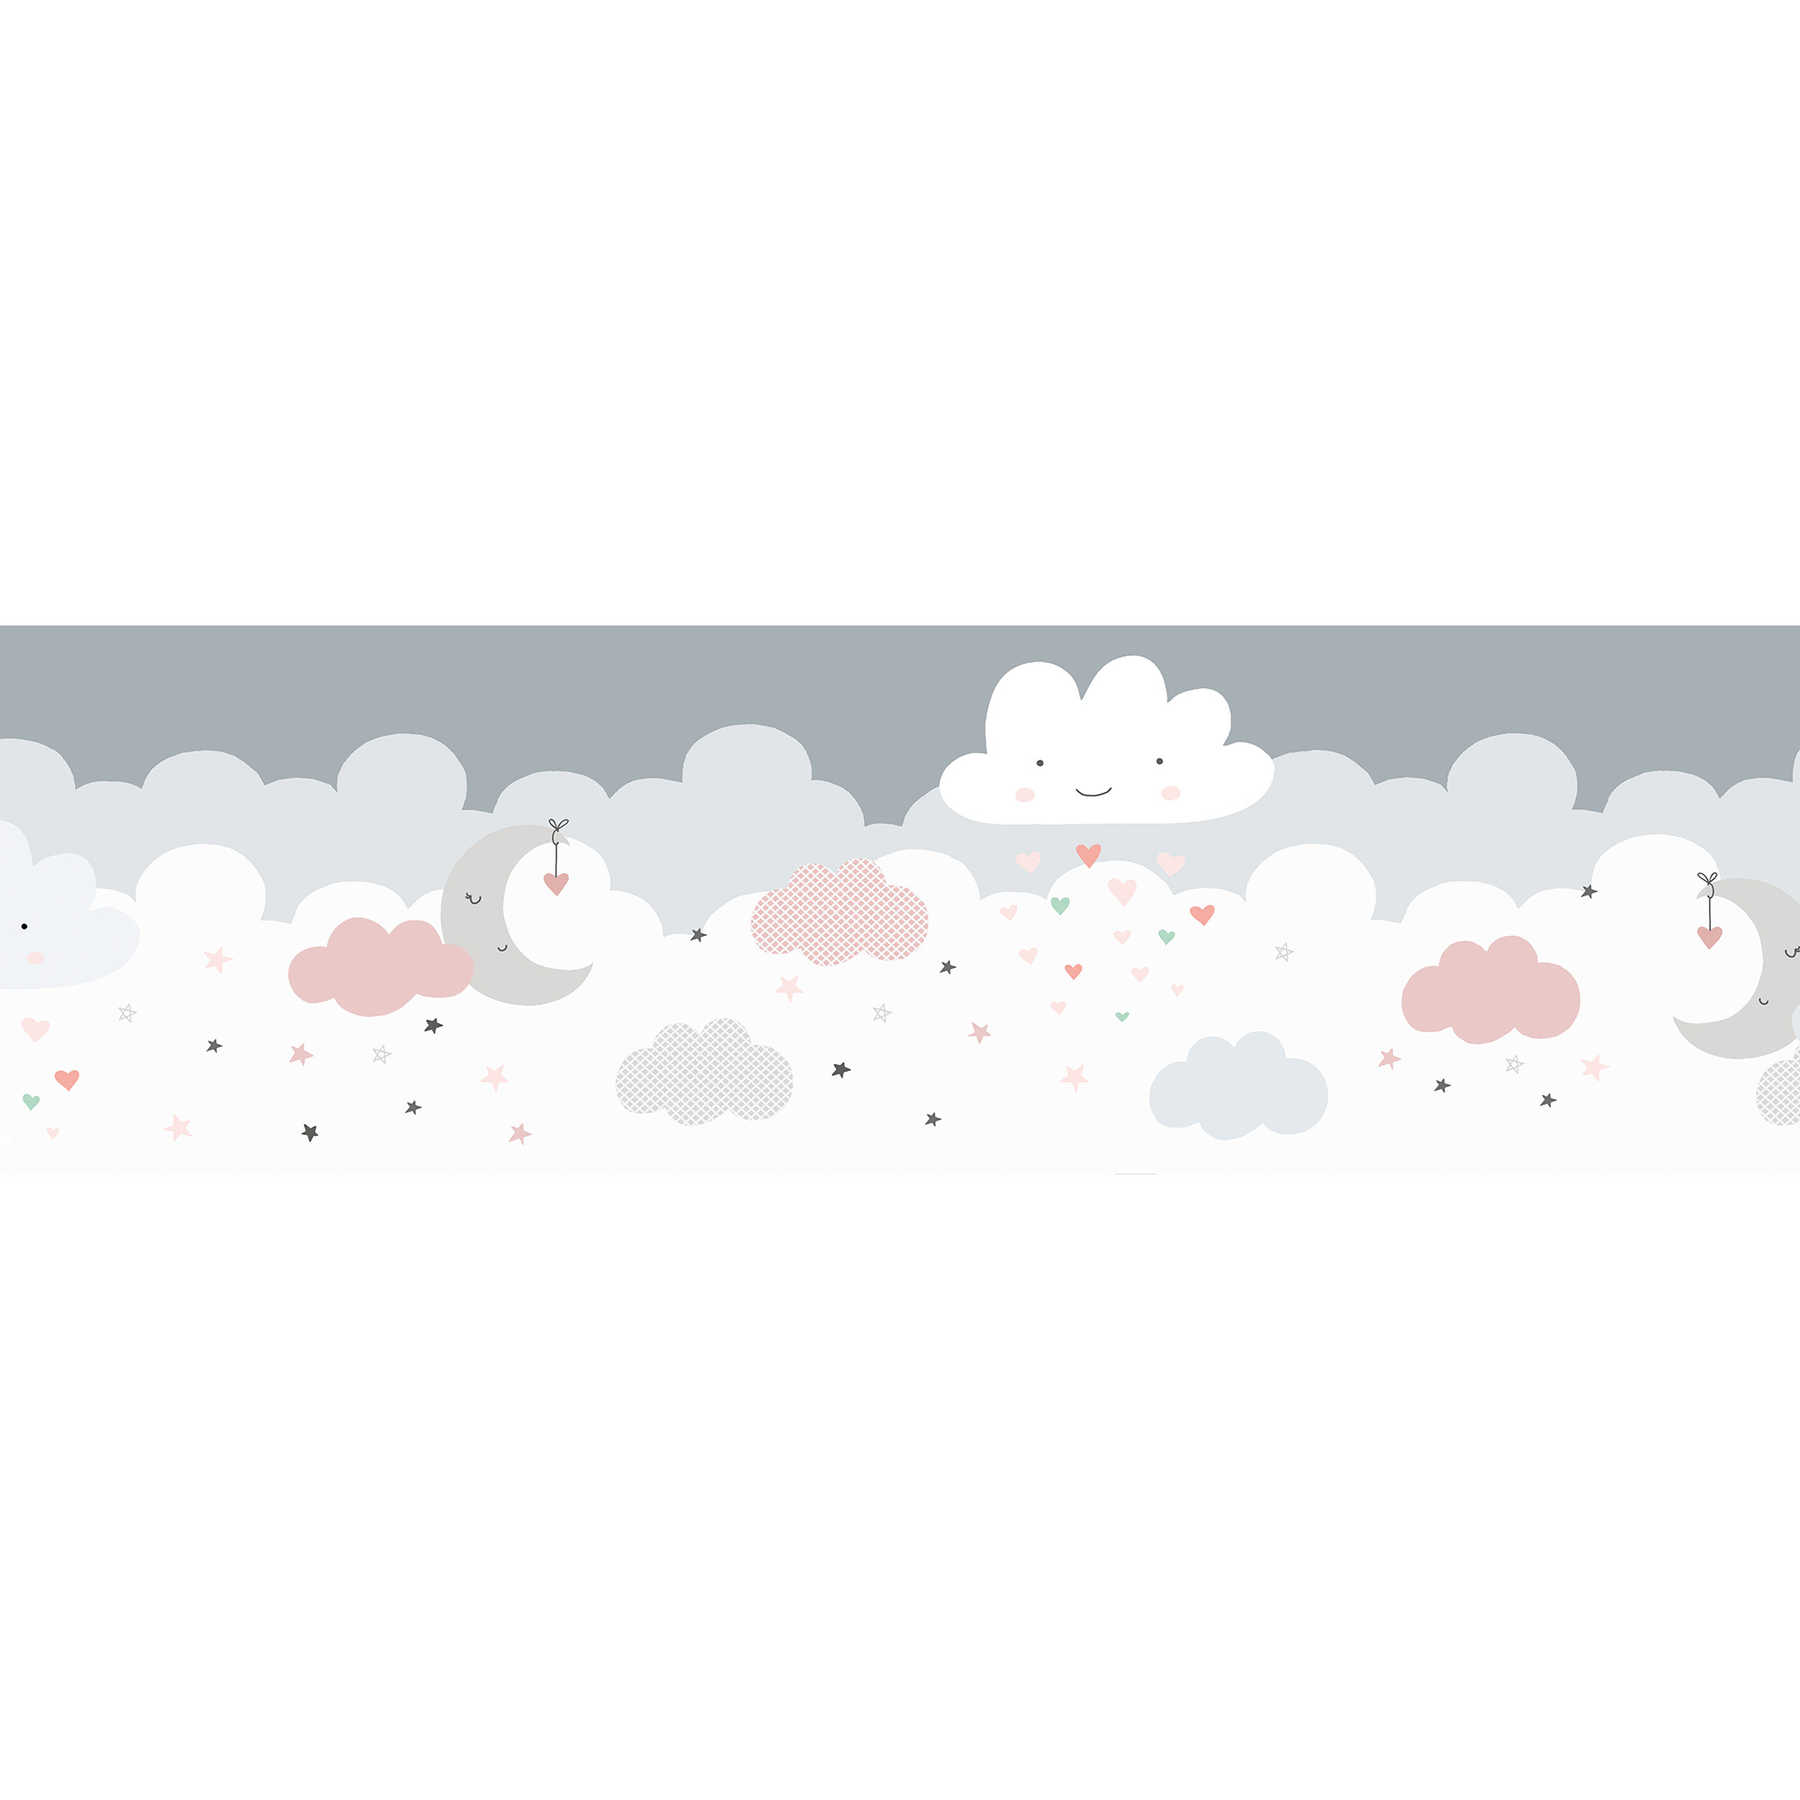 Self-adhesive baby room border "Pink sugar clouds" - pink, grey, white
